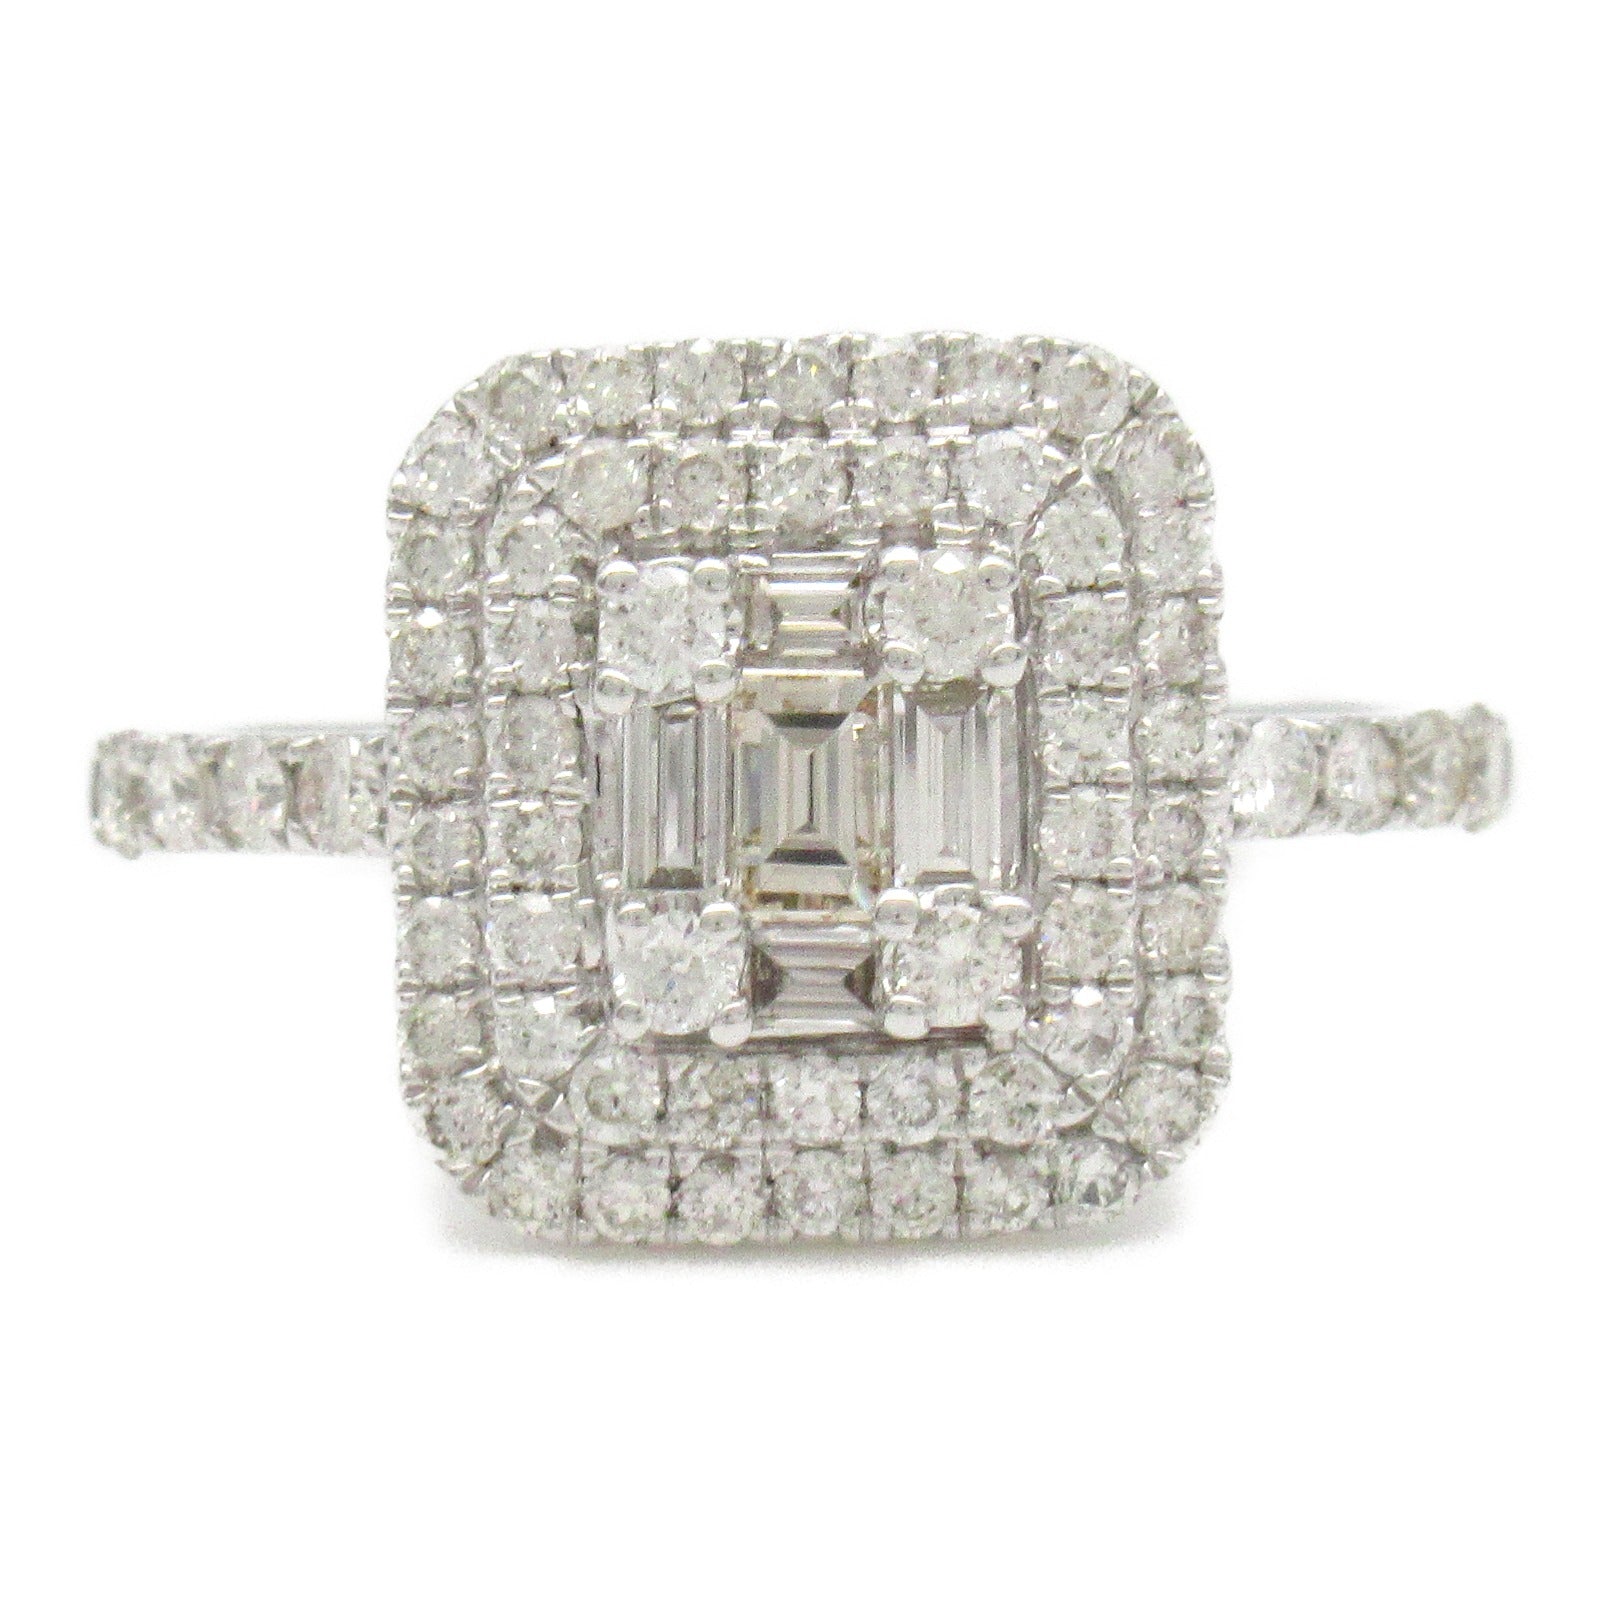 Jewelry Jewelry Diamond Ring Ring Ring Jewelry K18WG (White G) Diamond  Clear Diamond 2.6g